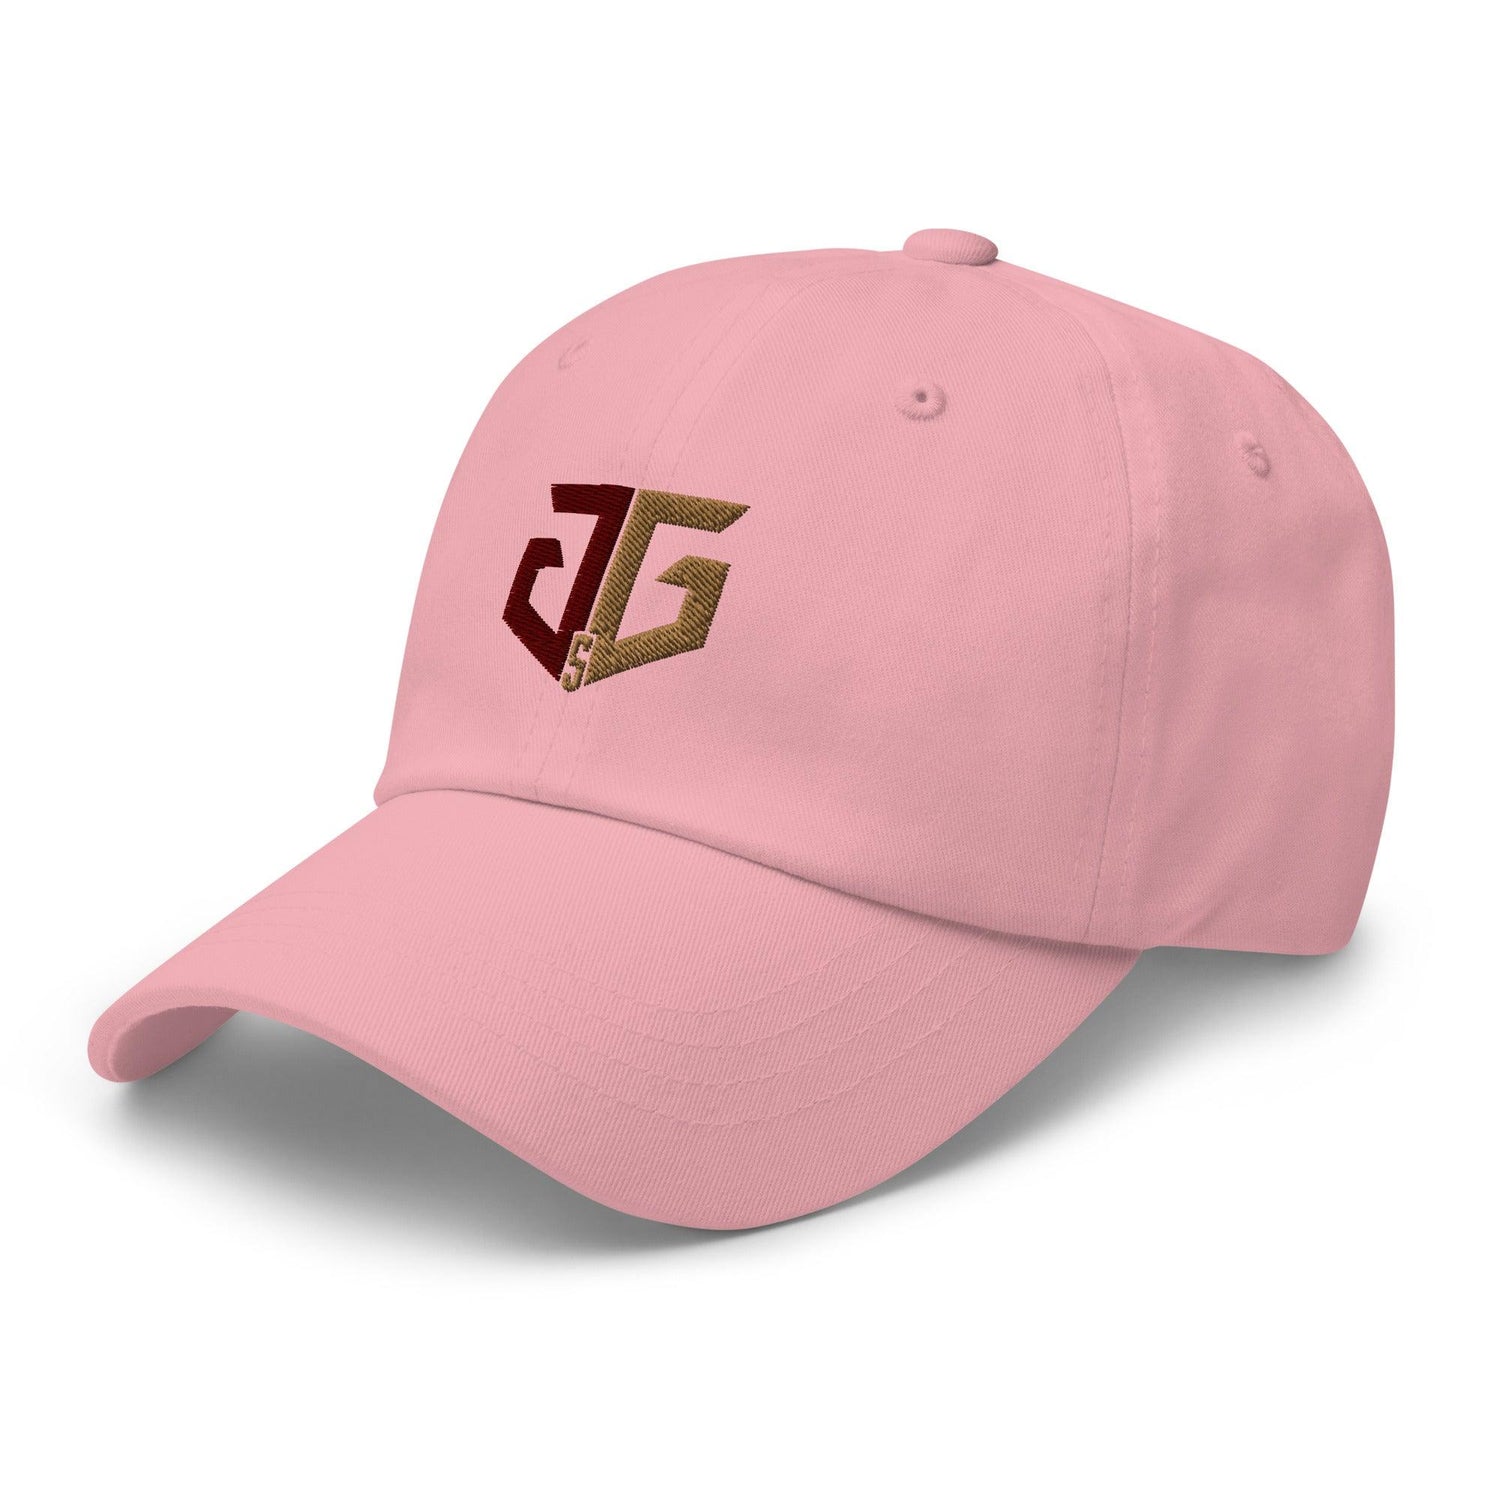 Jeff Garcia "Signature" hat - Fan Arch